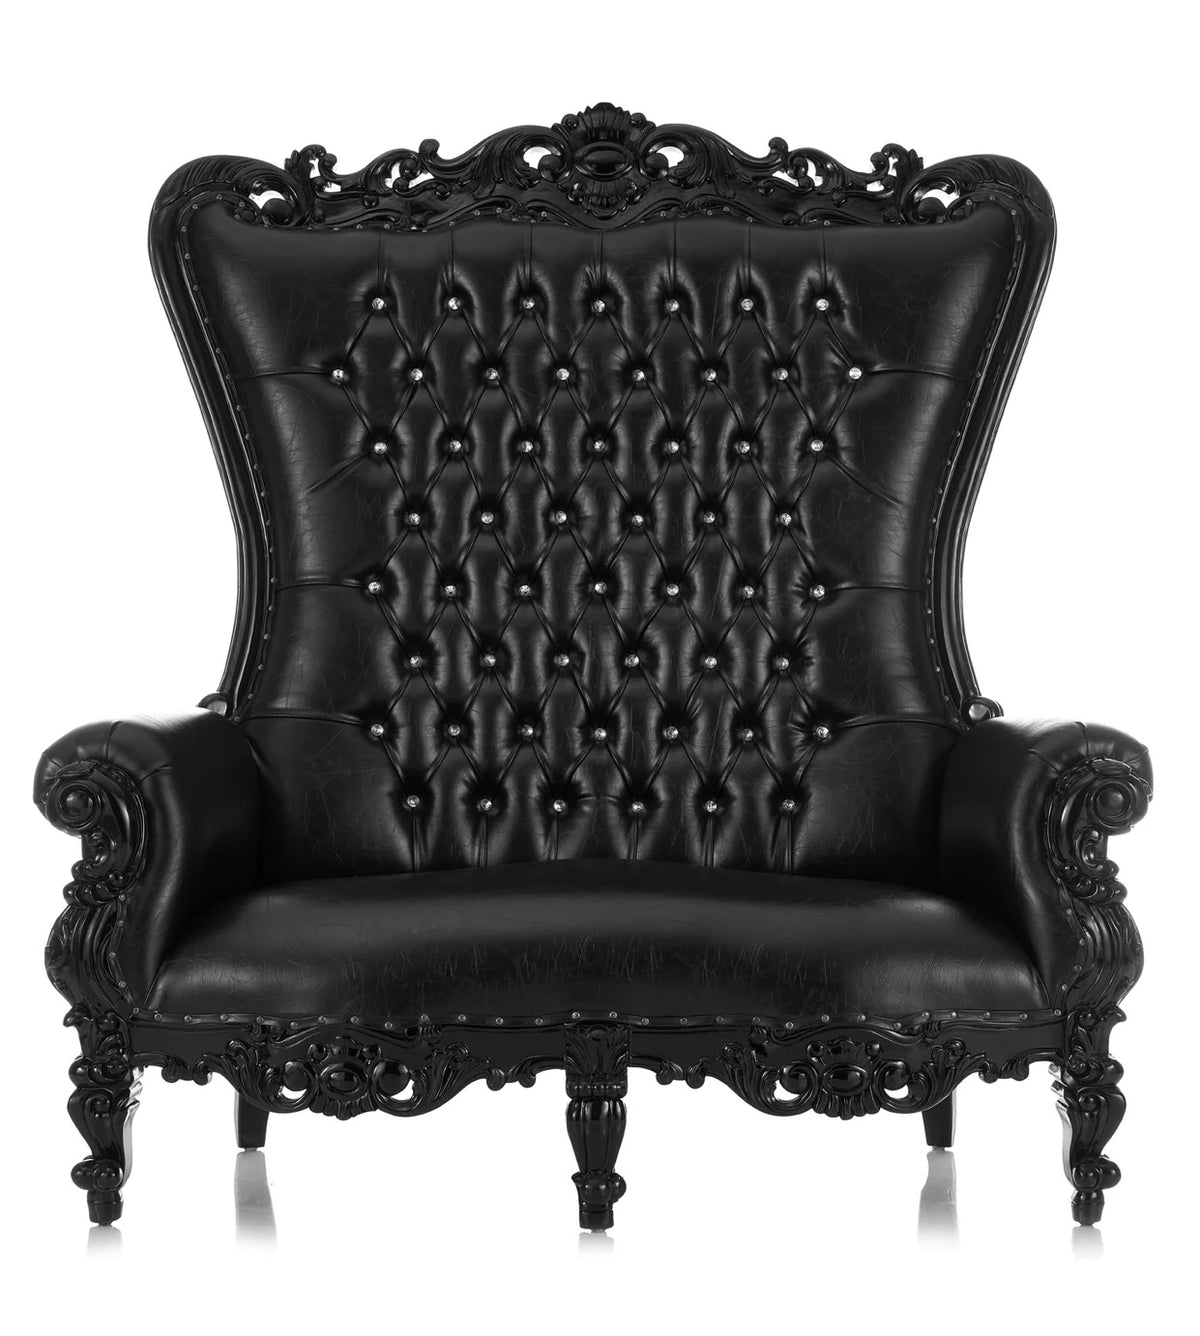 Adult Double All Black Royal Throne Sofa